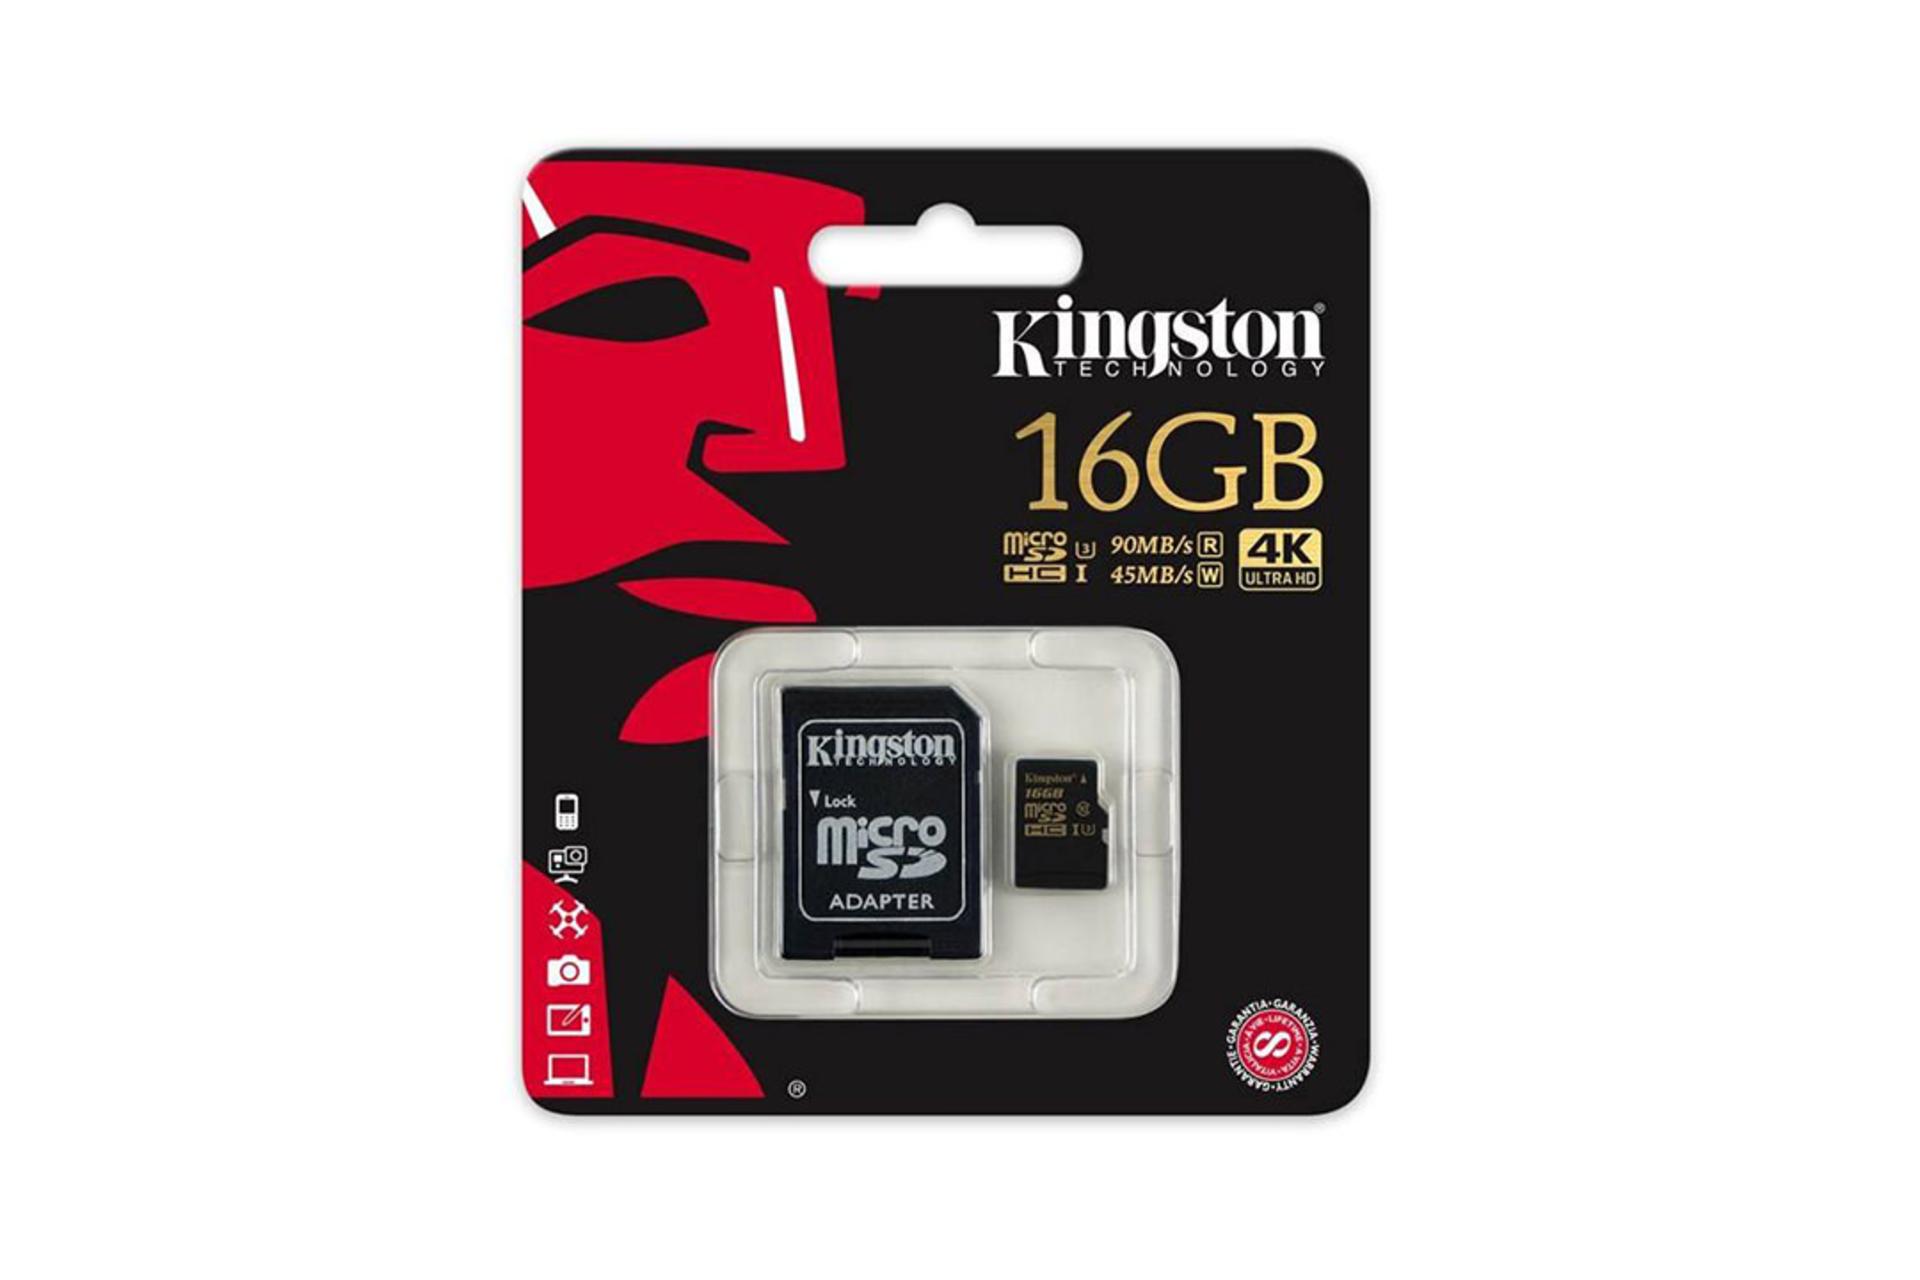 Kingston Gold microSDHC Class 10 UHS-I U3 16GB